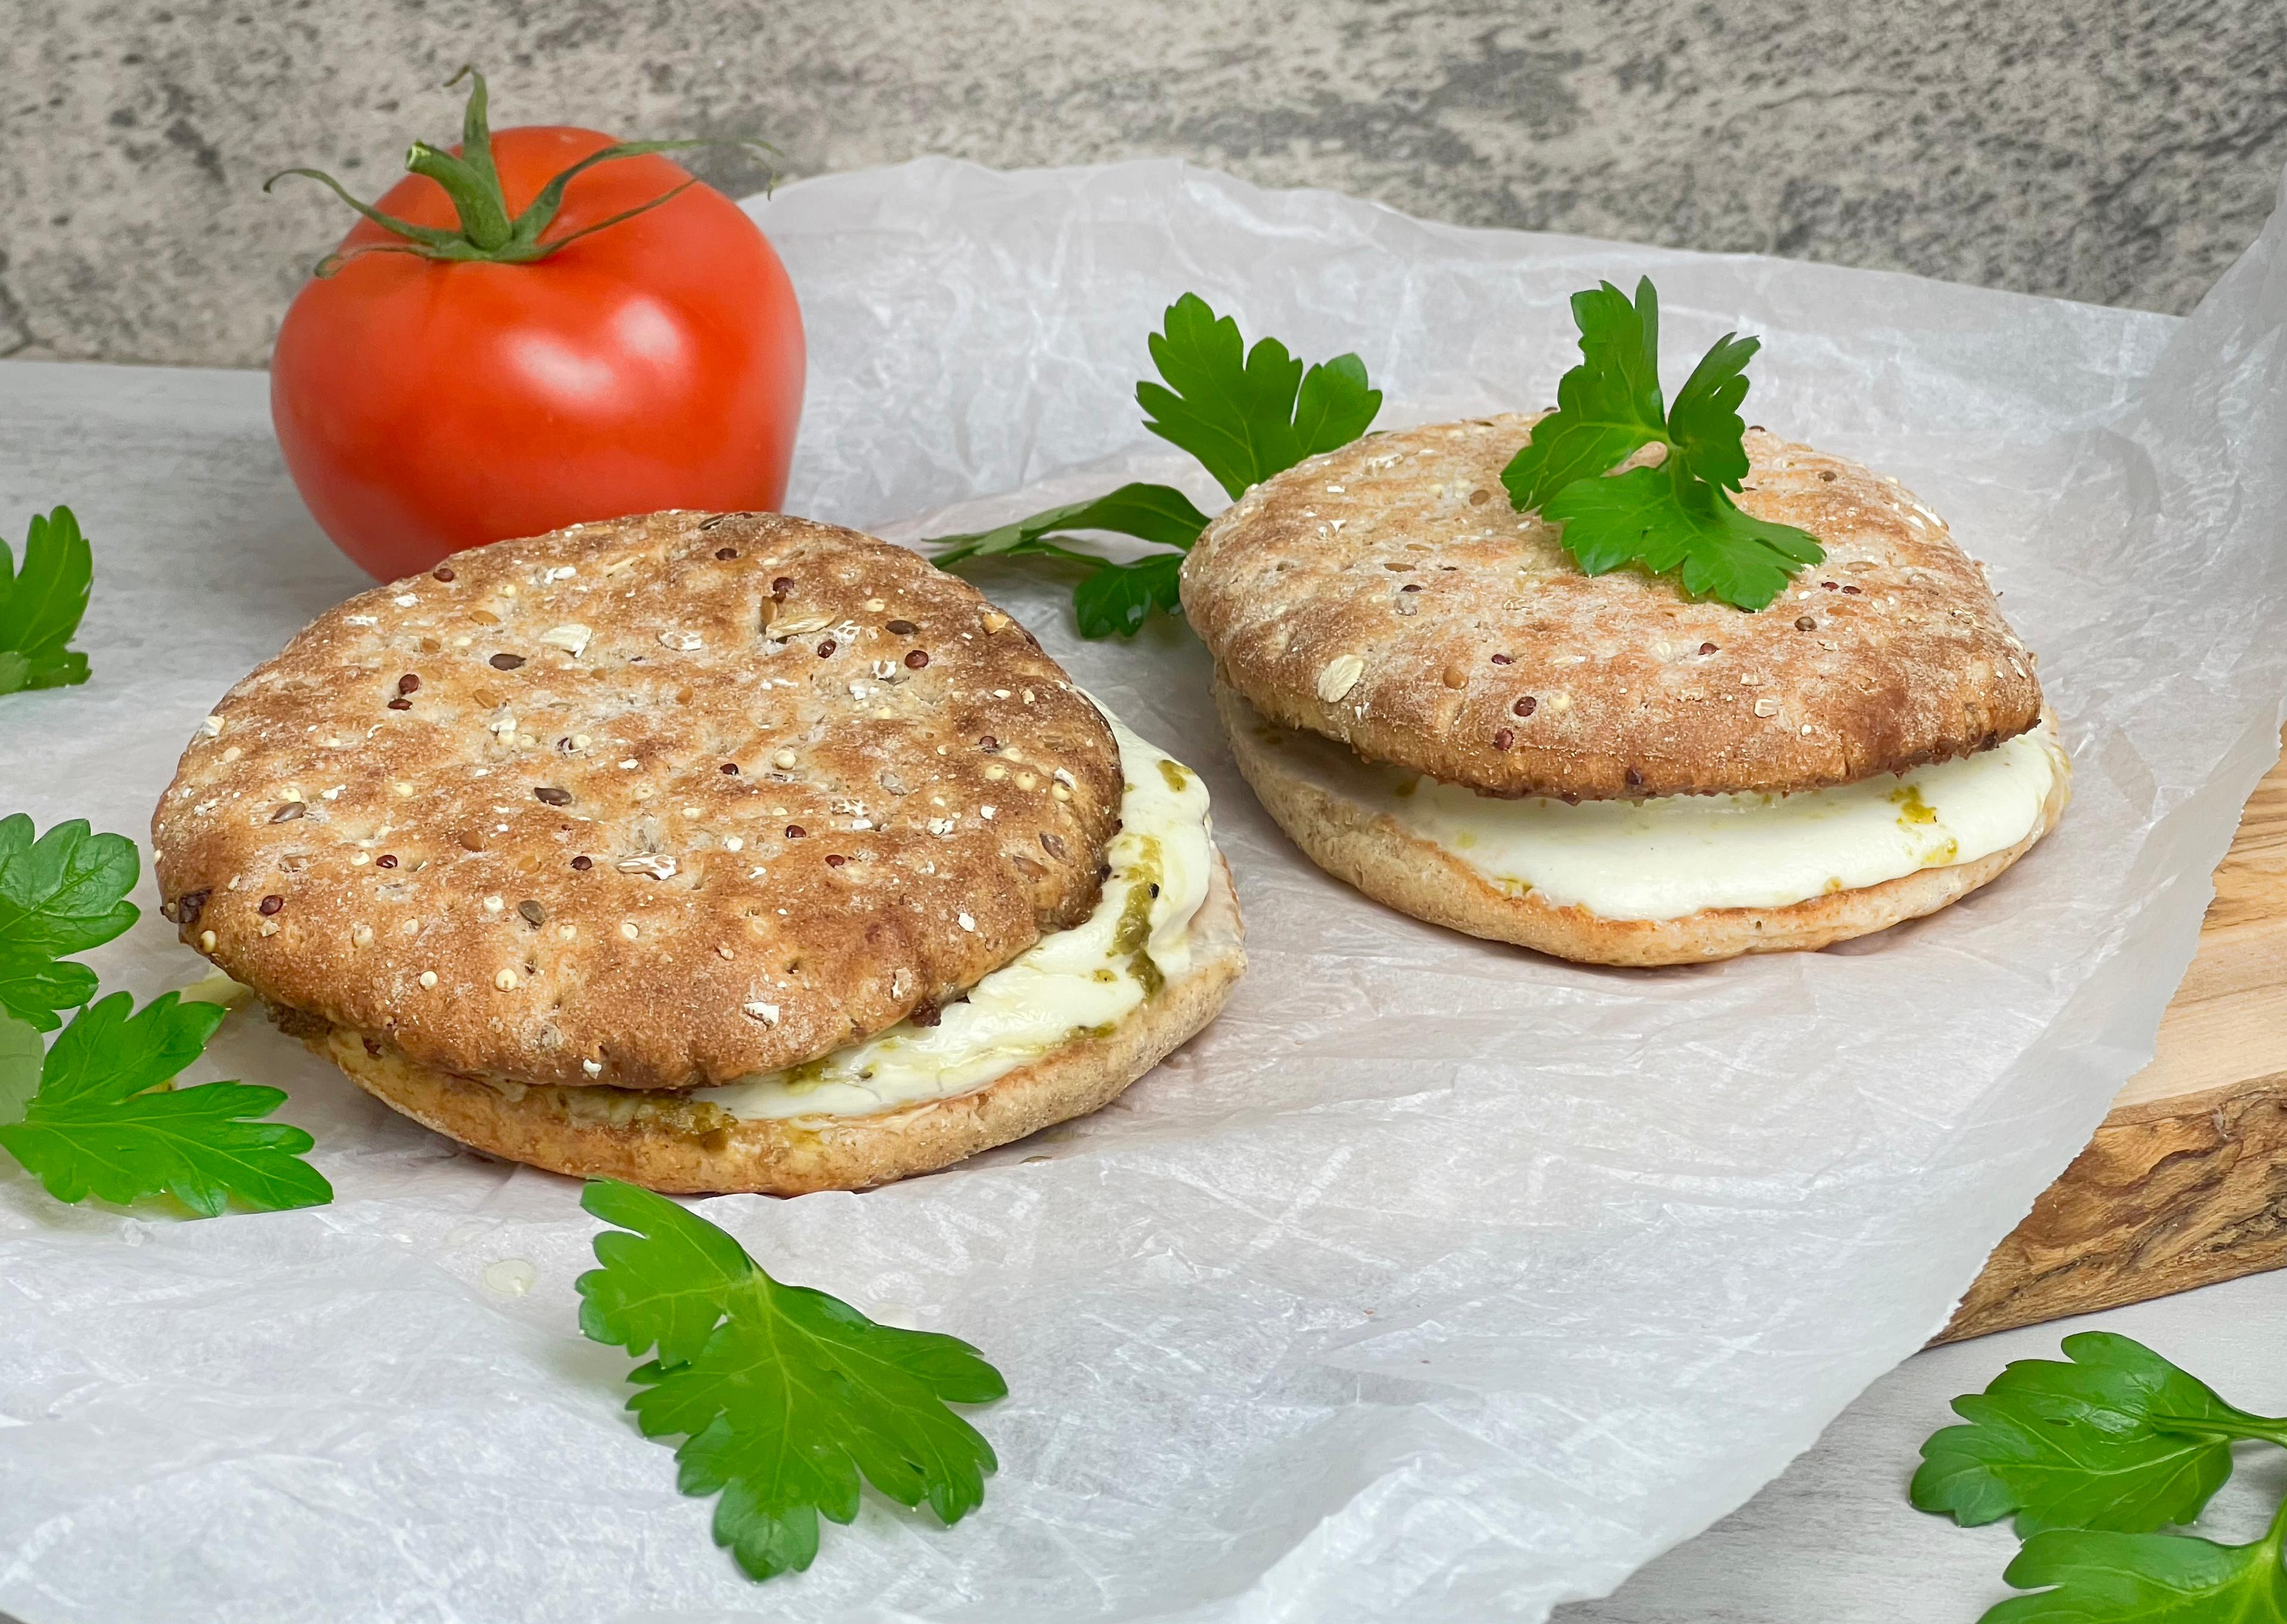 Image of Morning caprese style sandwich